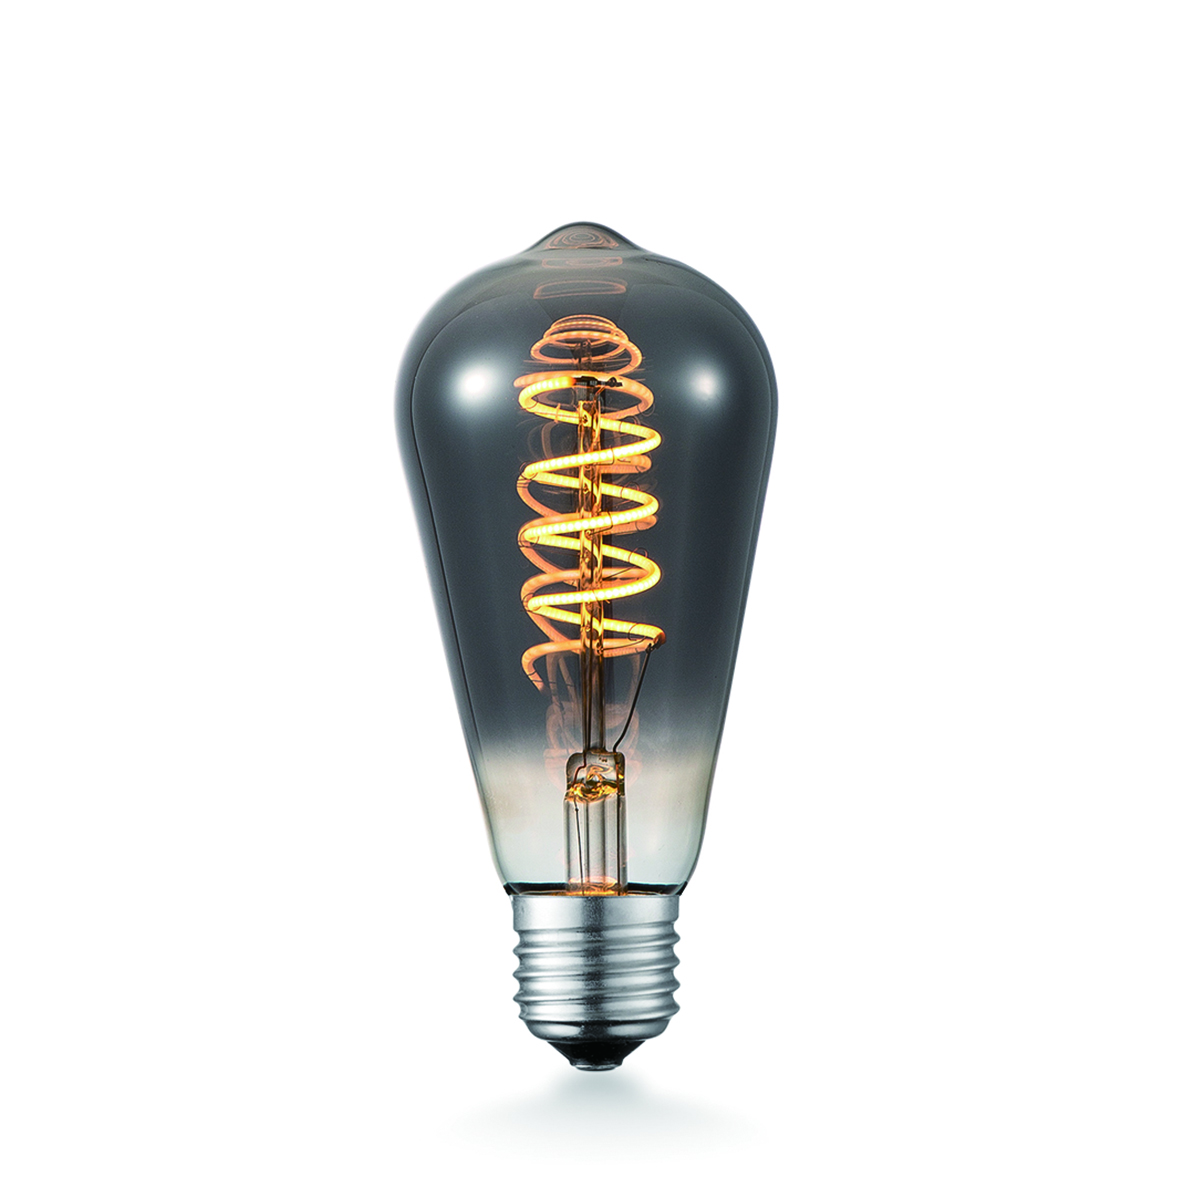 Tangla lighting - TLB-8002-02TM - LED Light Bulb Double Spiral filament - ST64 2W titanium - dimmable - E27